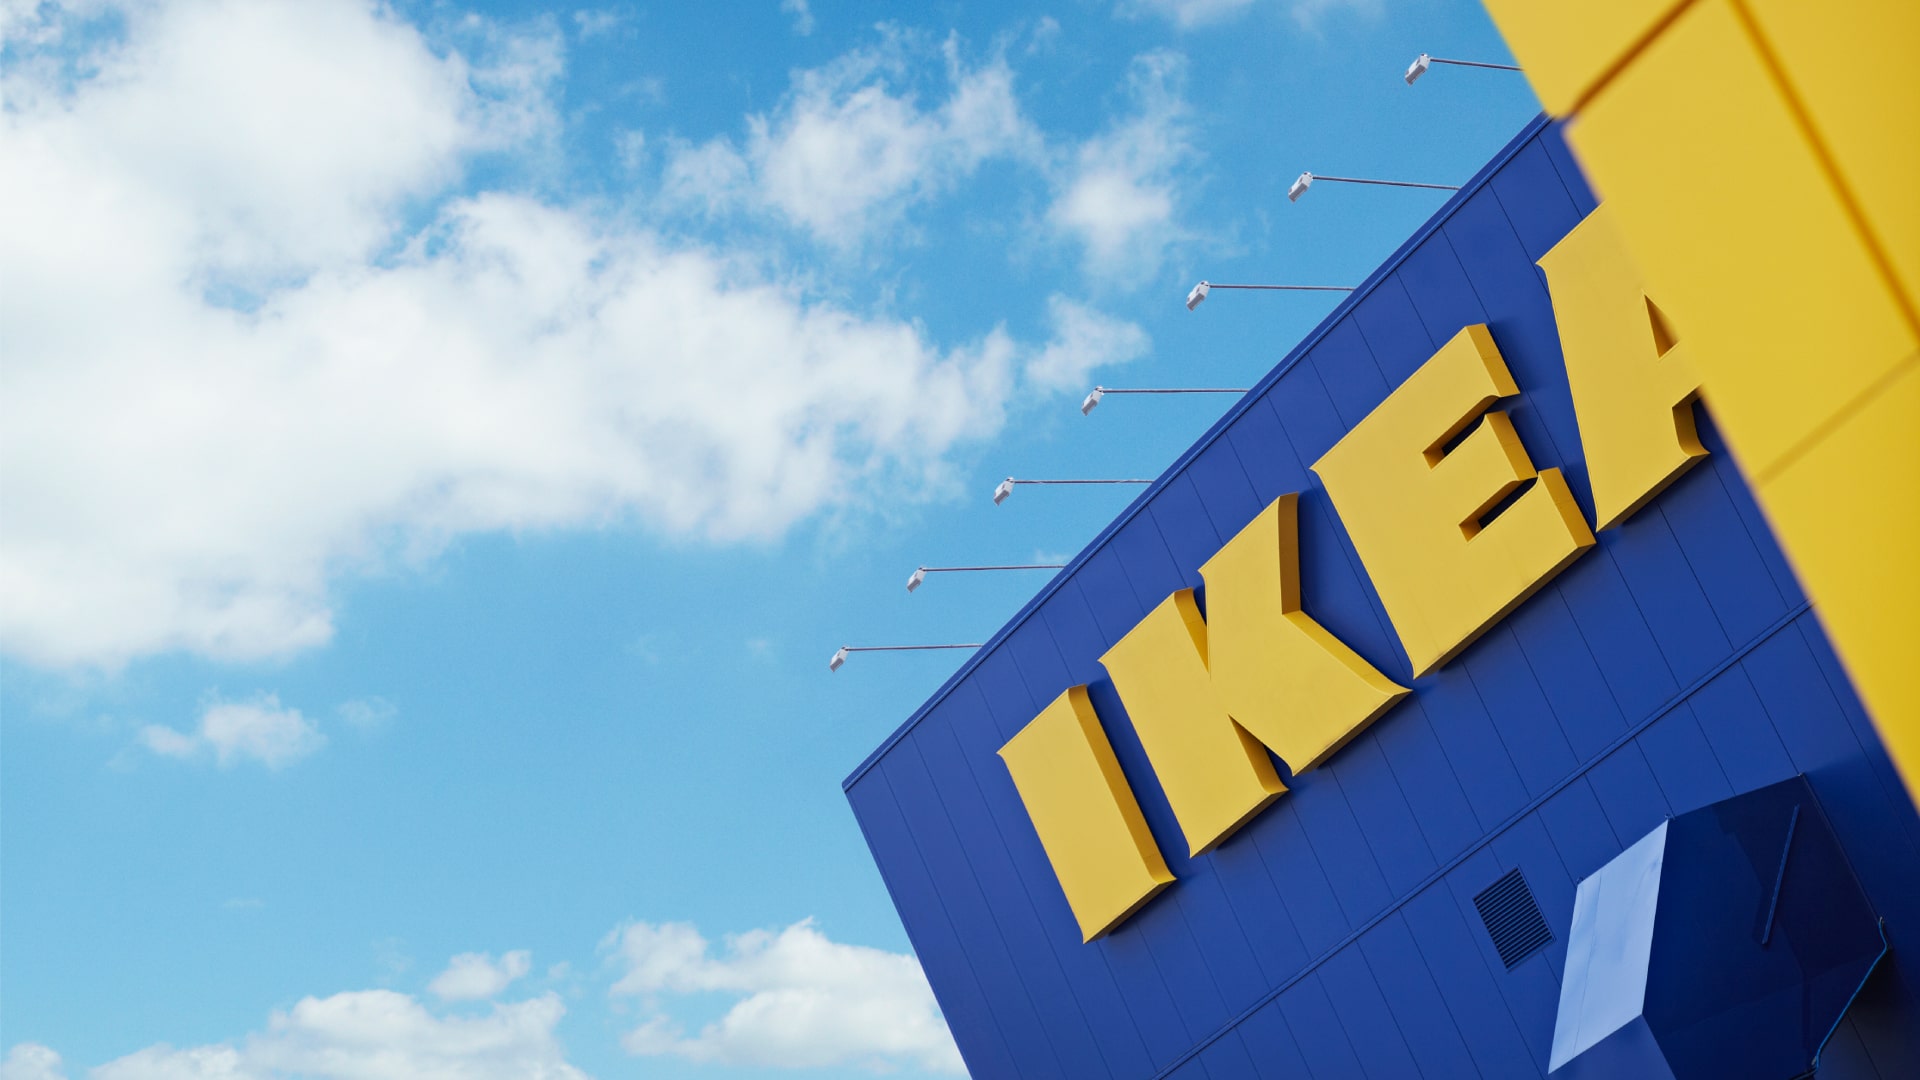 An IKEA store against a blue sky.